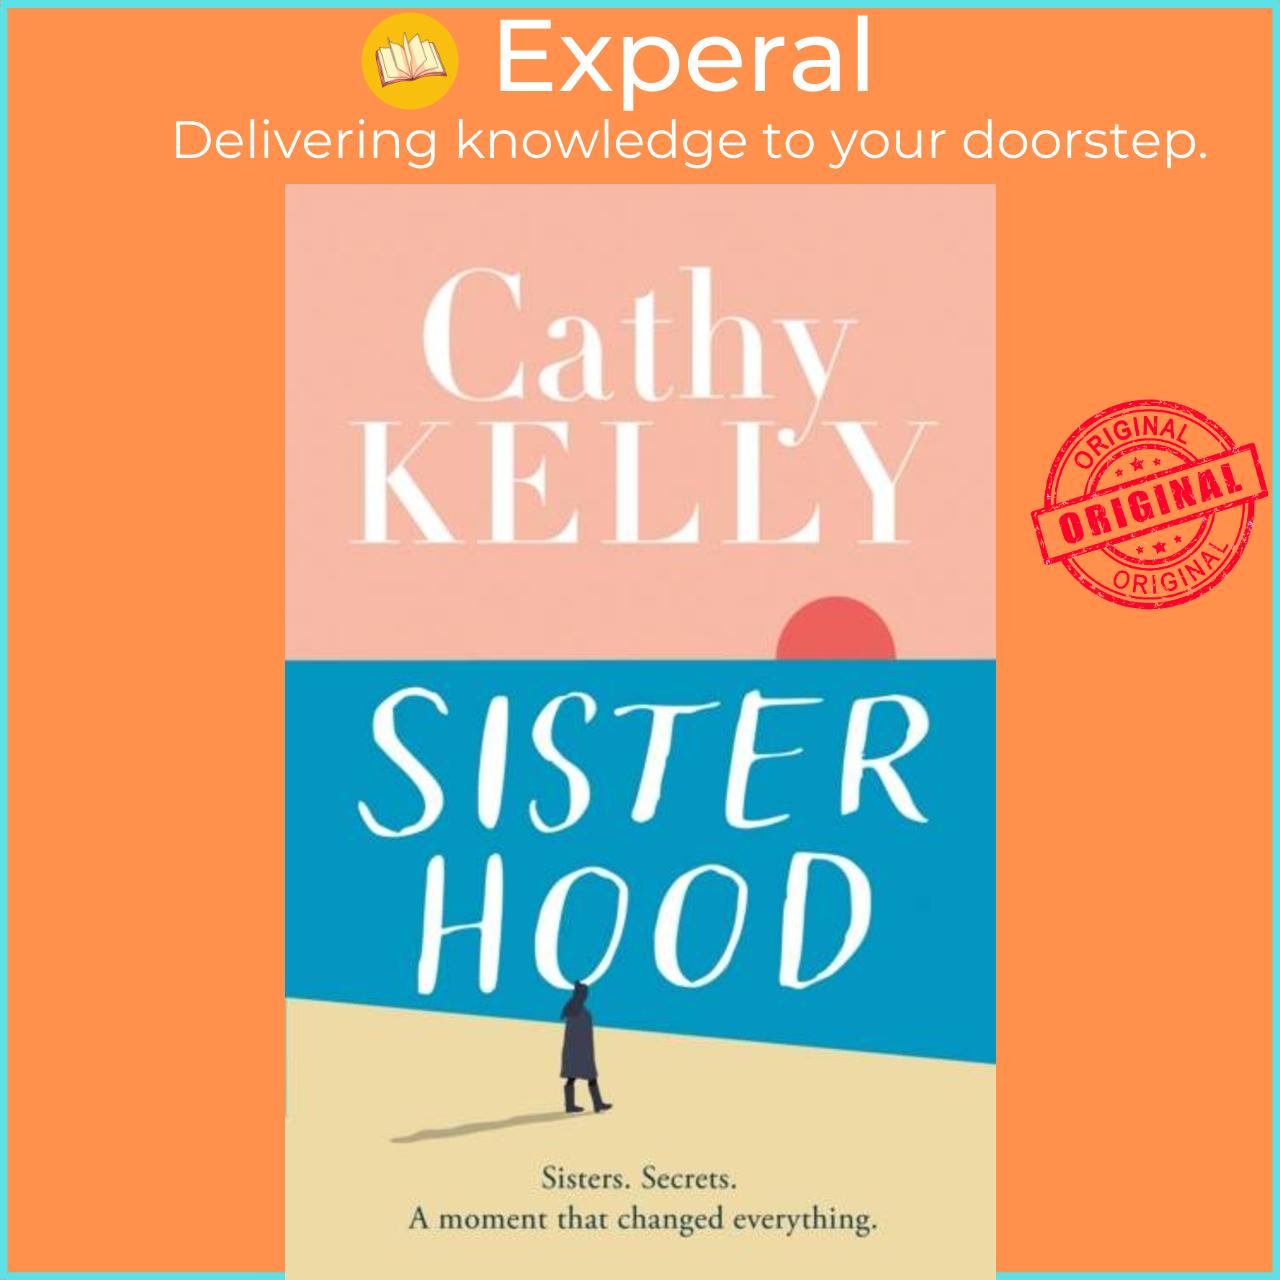 Sách - Sisterhood by Cathy Kelly (UK edition, hardcover)